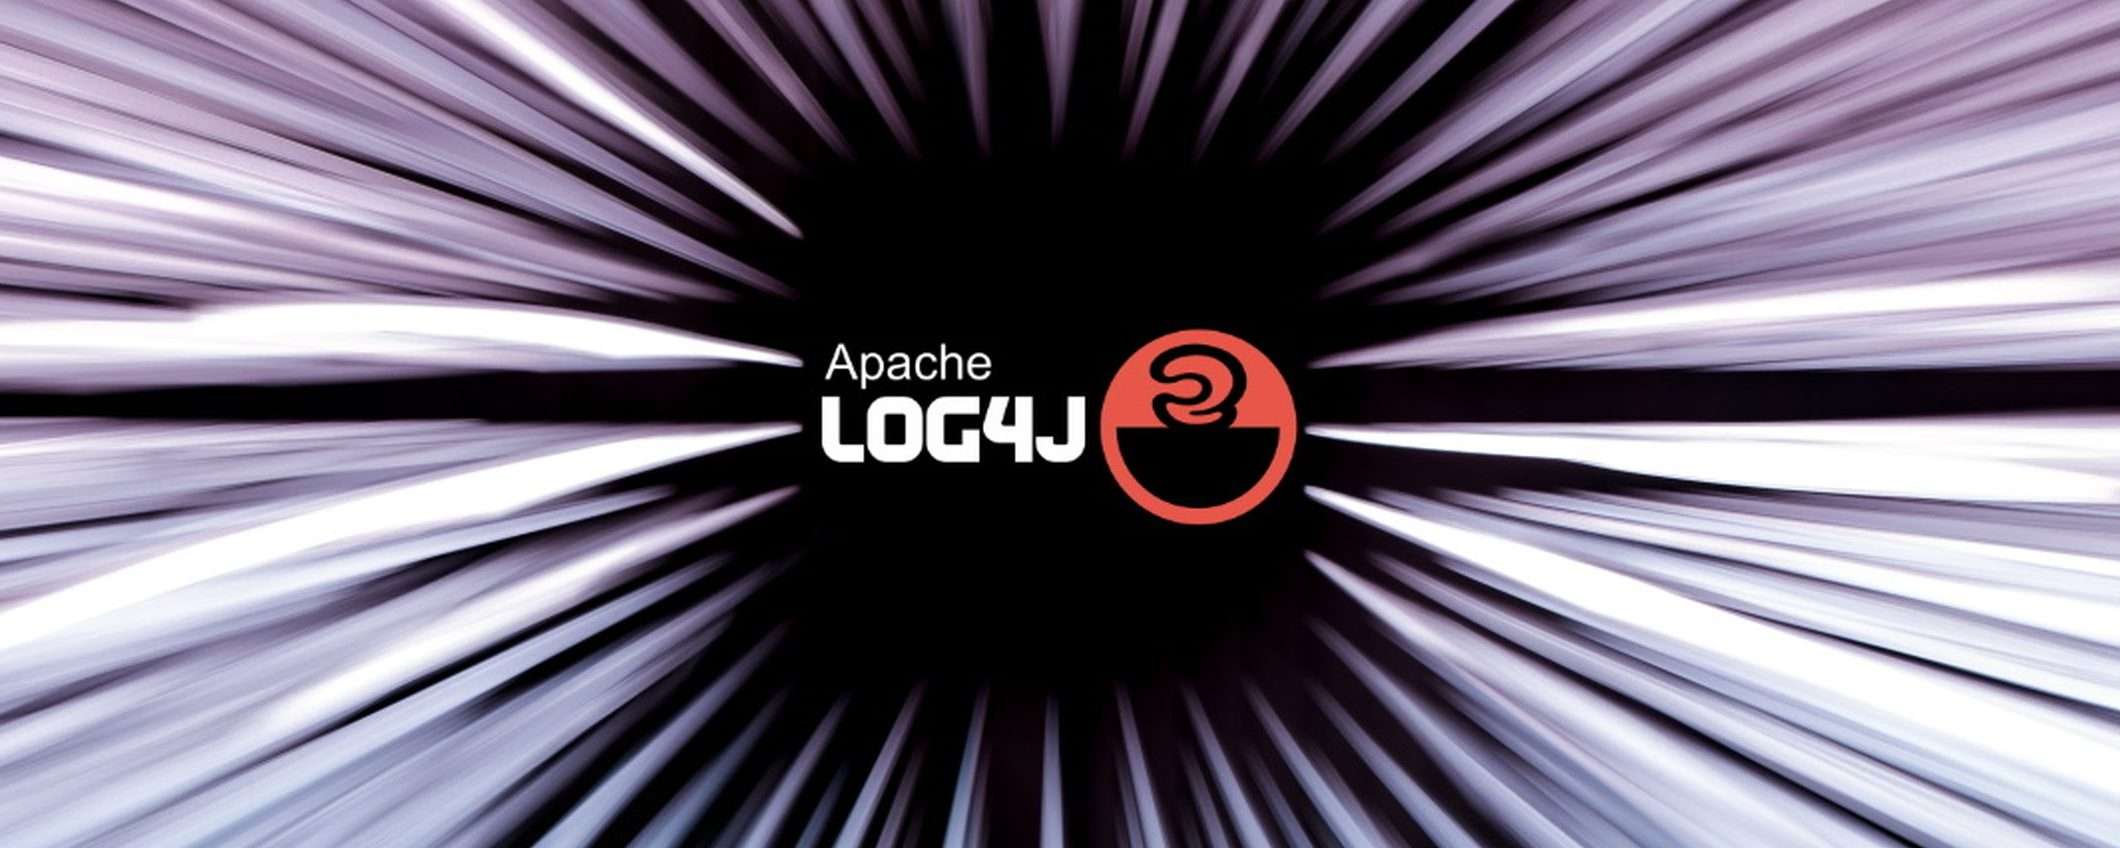 Vulnerabilità Log4Shell: Apache rilascia la patch